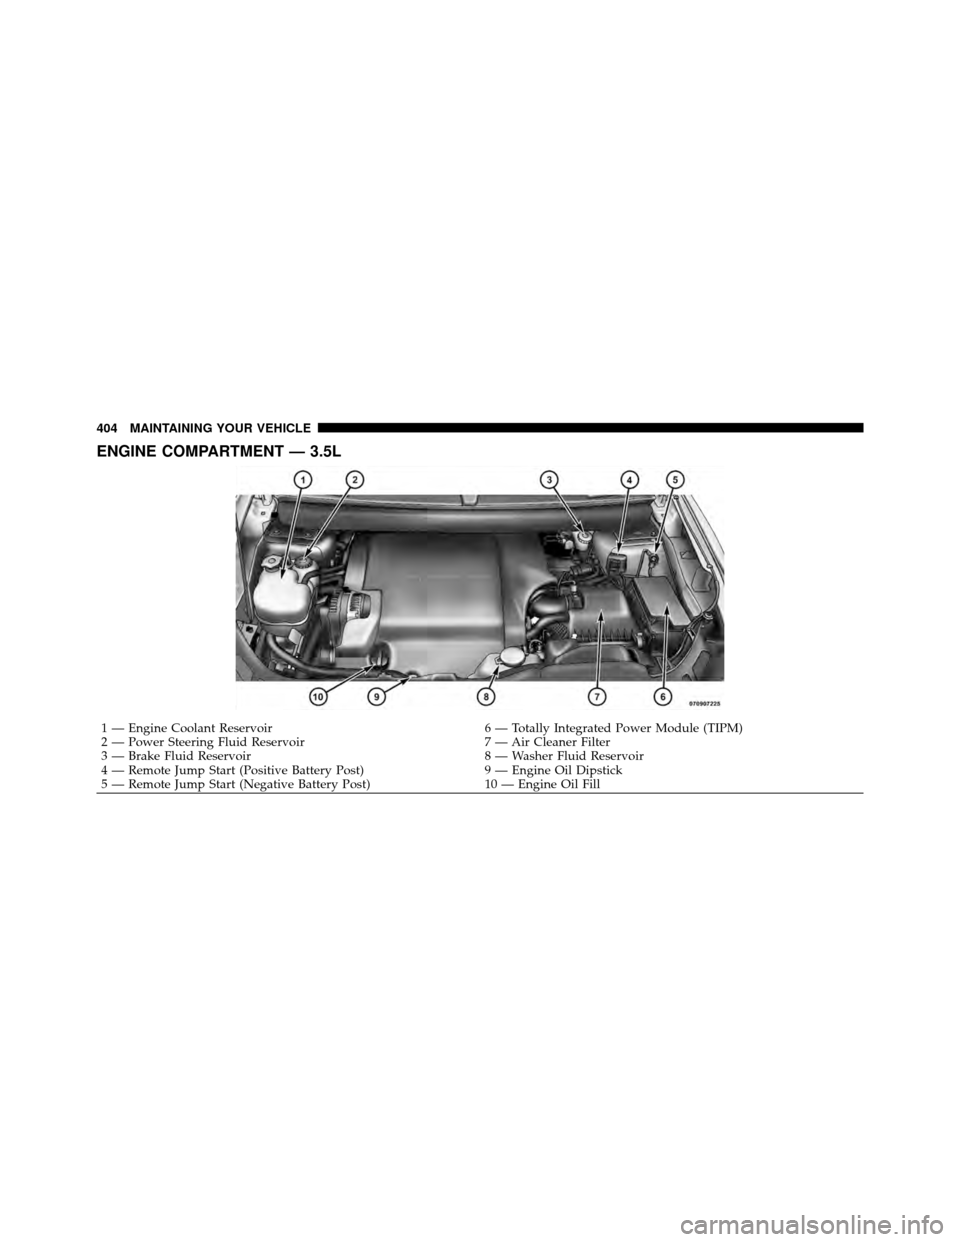 DODGE JOURNEY 2010 1.G User Guide ENGINE COMPARTMENT — 3.5L
1 — Engine Coolant Reservoir6 — Totally Integrated Power Module (TIPM)
2 — Power Steering Fluid Reservoir 7 — Air Cleaner Filter
3 — Brake Fluid Reservoir 8 — W